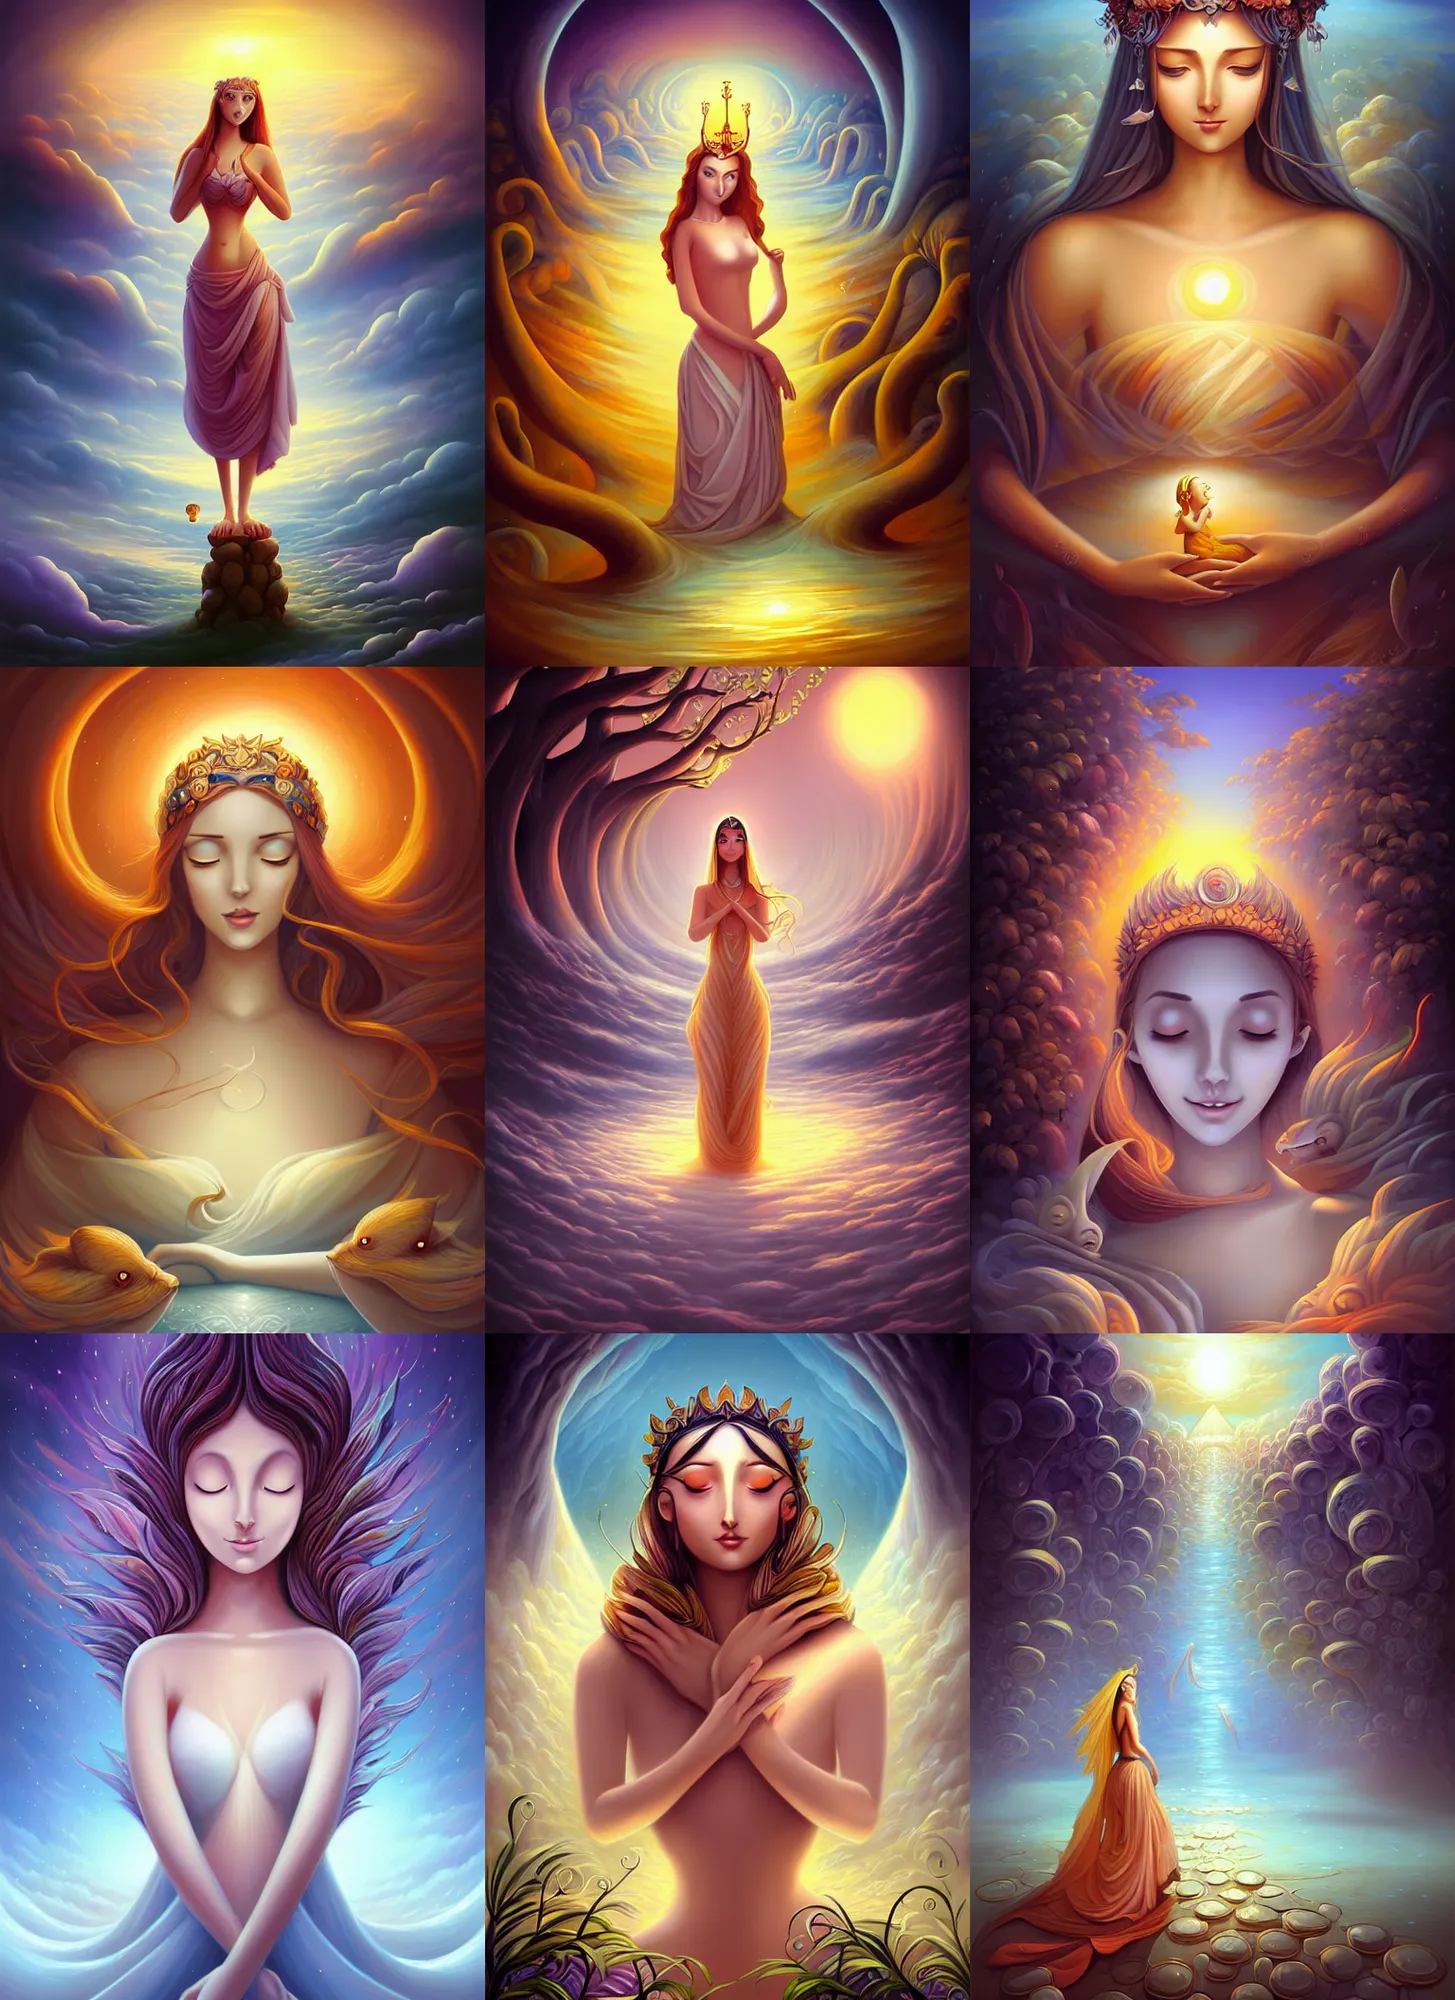 Prompt: beautiful goddess, an illustration by cyril rolando, vladimir kush and goro fujita, deviantart, fantasy art, storybook illustration, oil on canvas